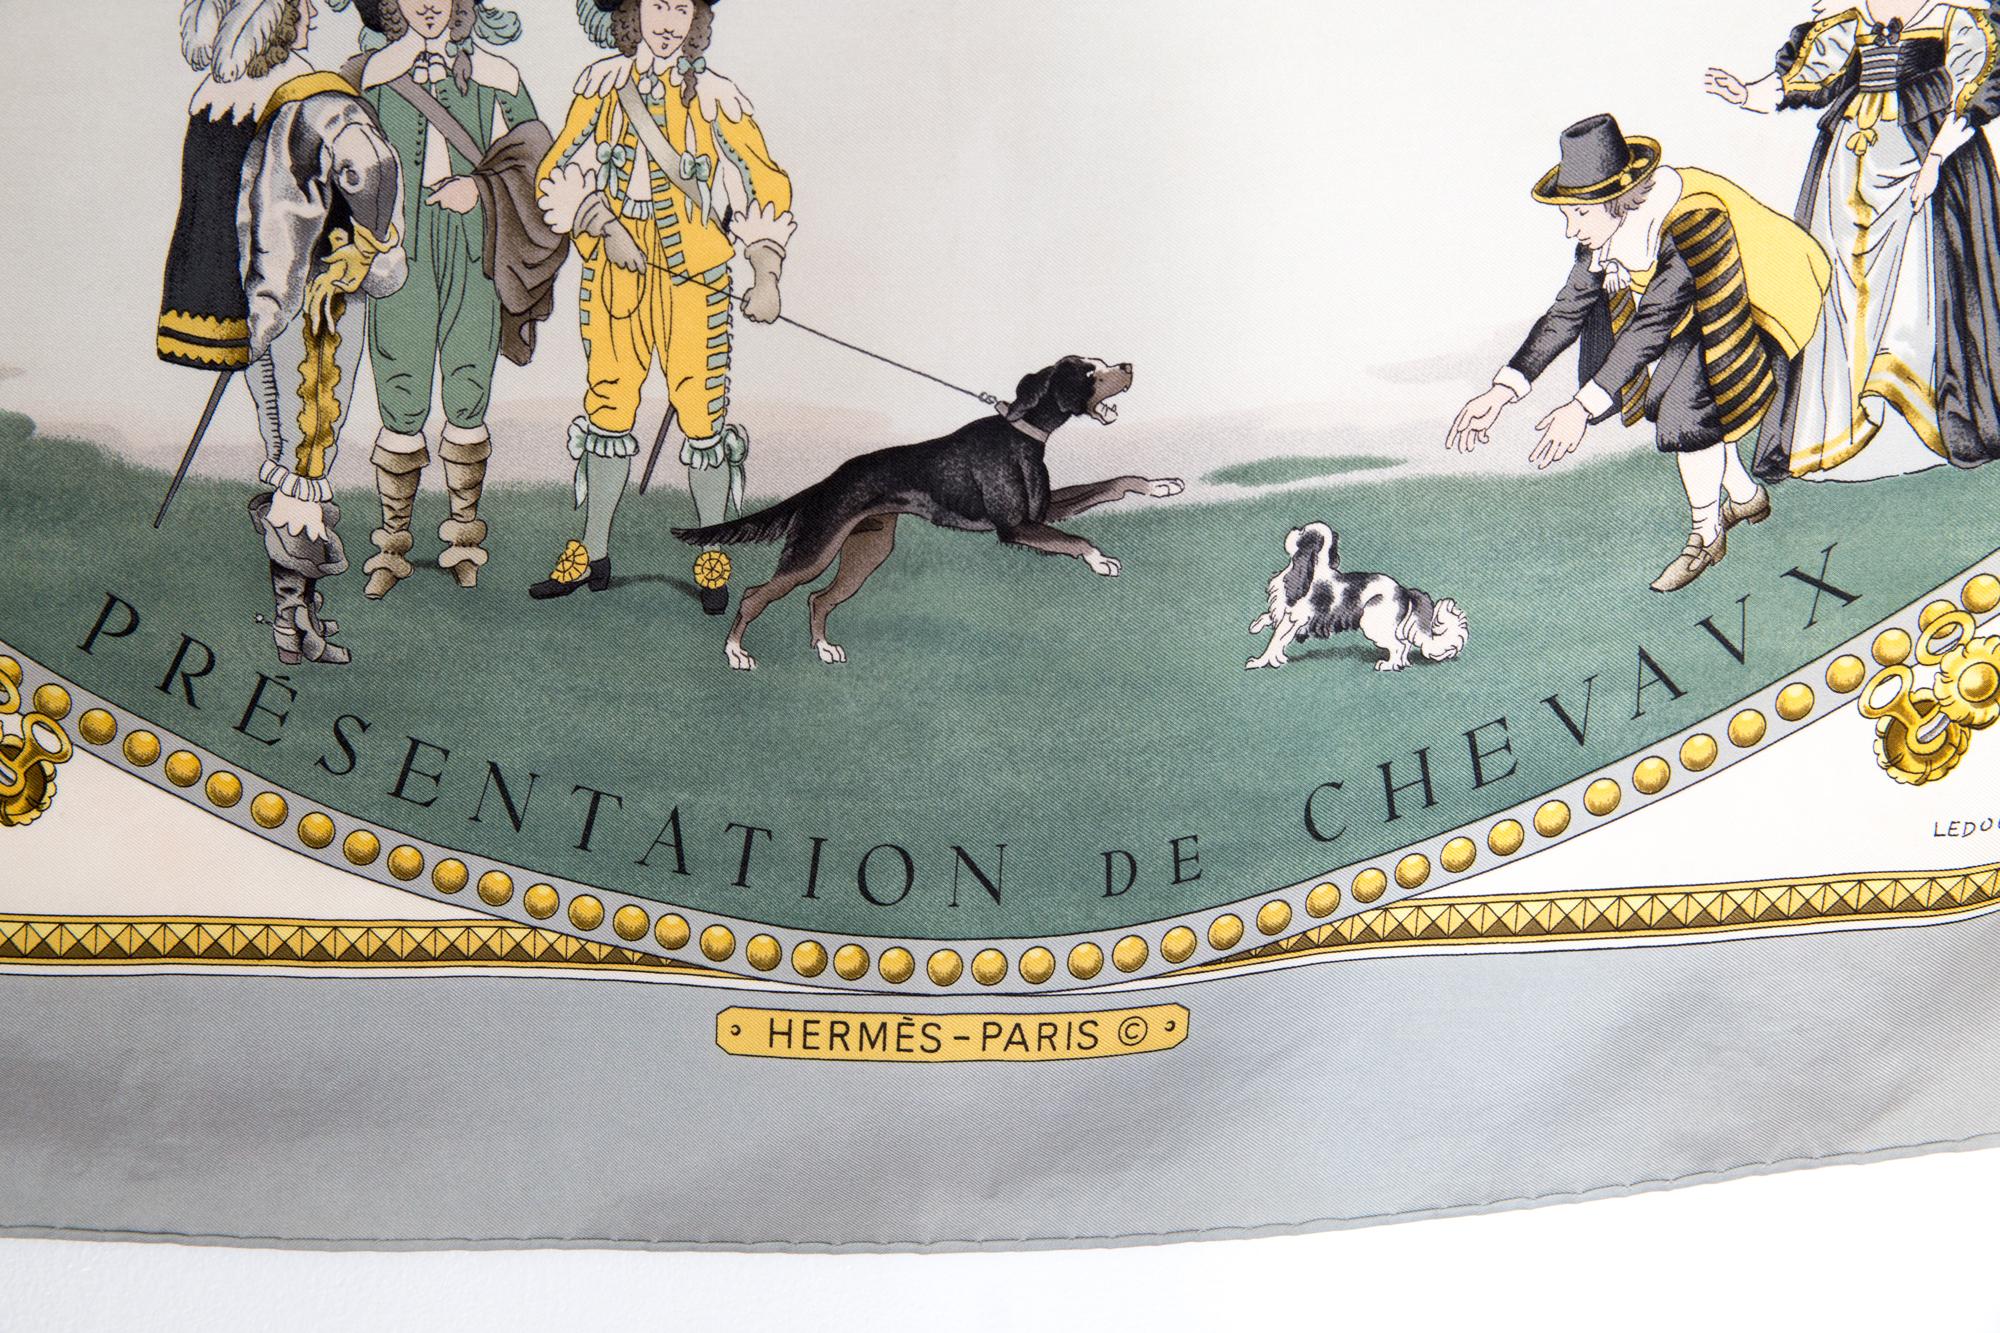 Hermes 1642 Presentation de Chevaux by Philippe Ledoux Silk Scarf 1